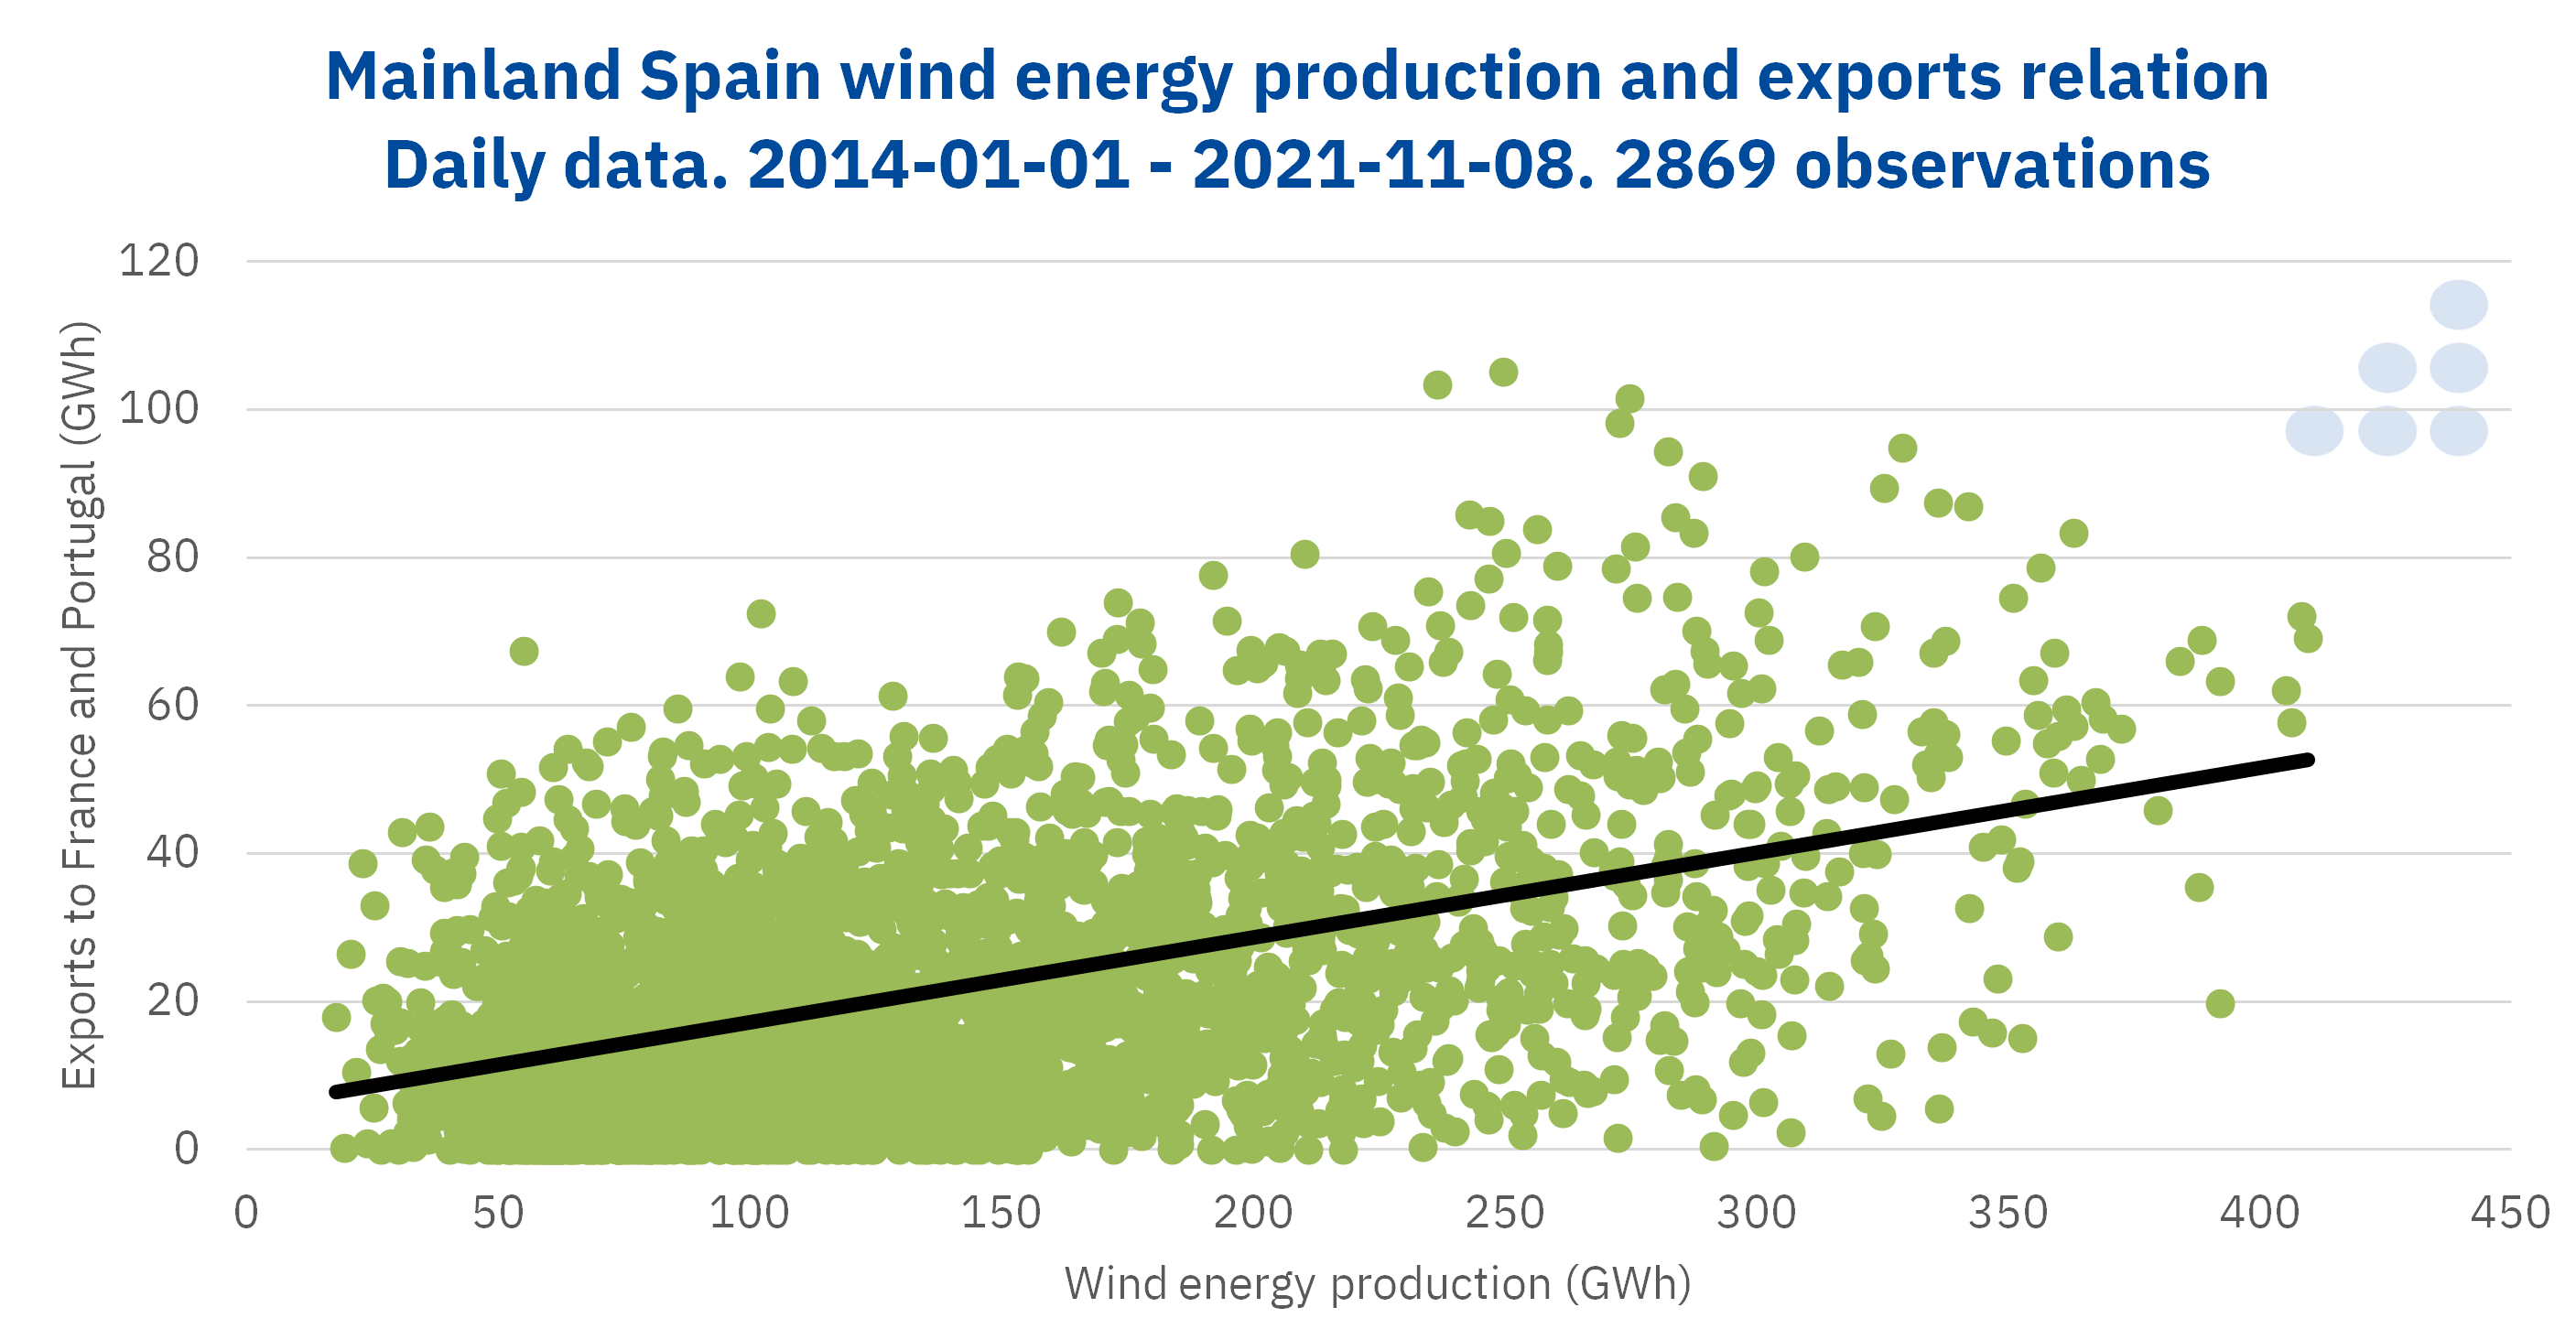 AleaSoft - Mainland spain wind energy production exports relation